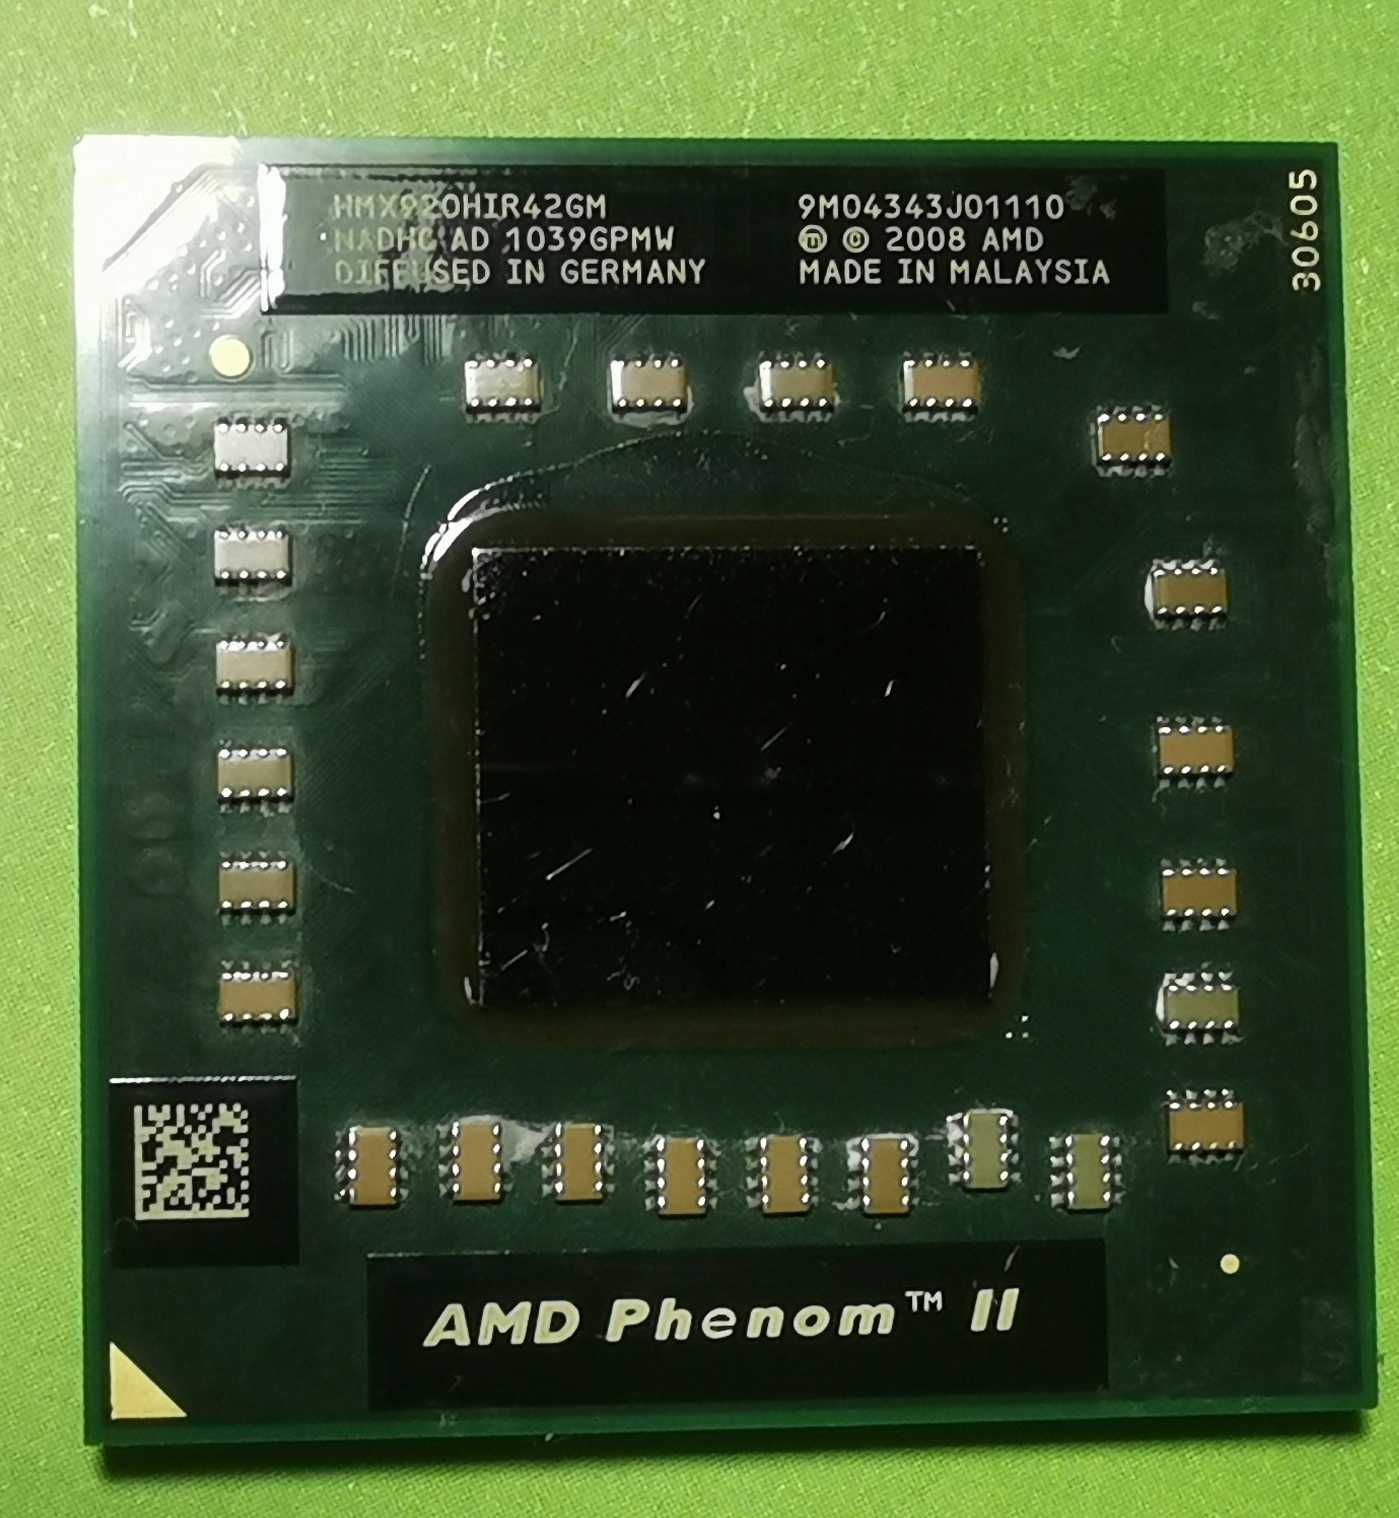 AMD Phenom II X920 HMX920HIR42GM Socket S1 (S1g4)